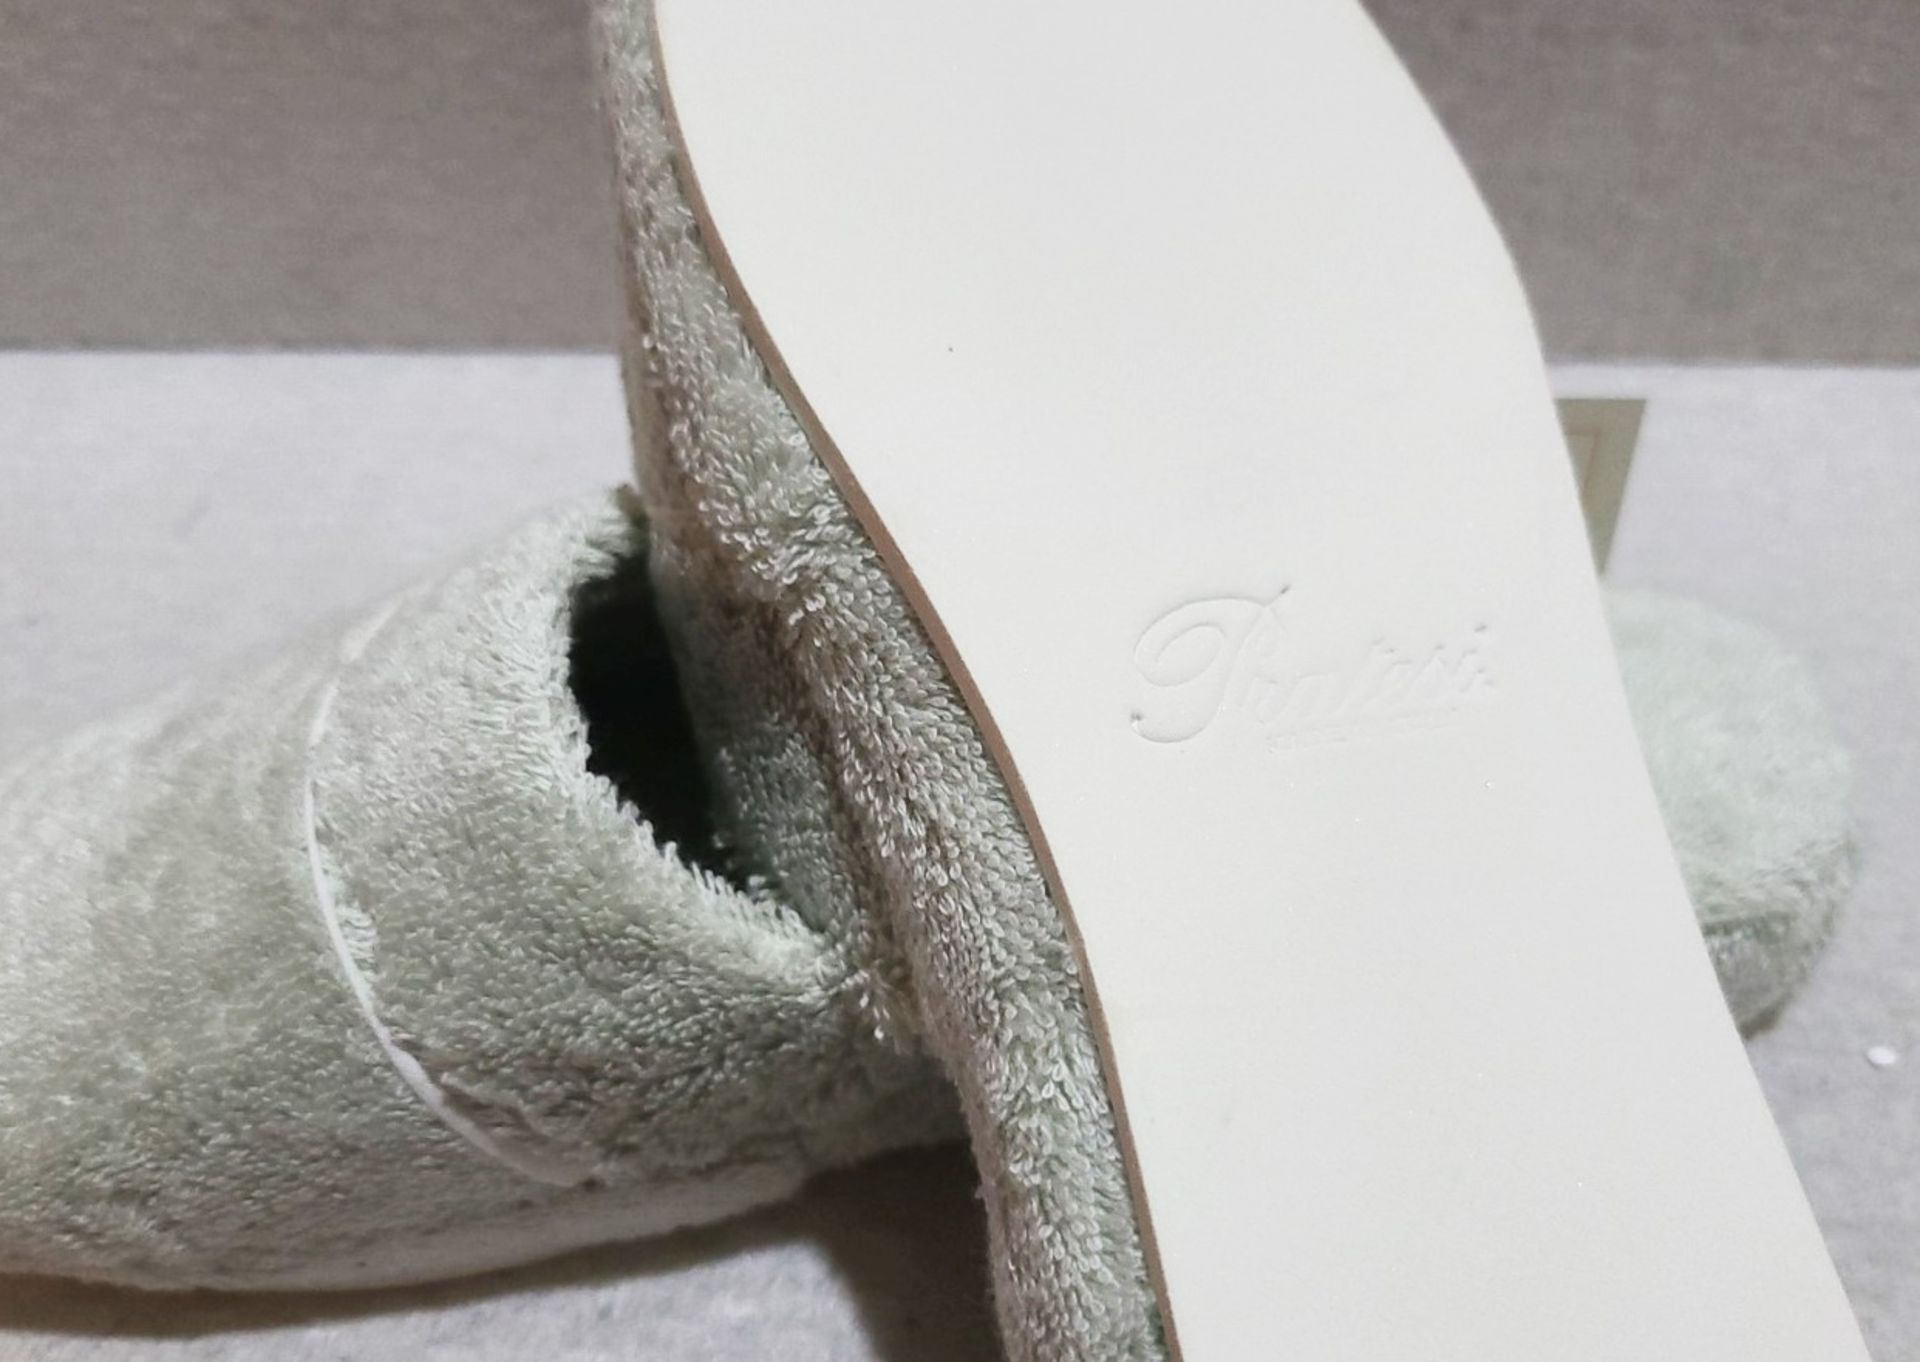 1 x PRATESI Panofole Lunar Grey Terry Cotton Slippers Size 38/39 - Original Price £200.00 - Image 3 of 4